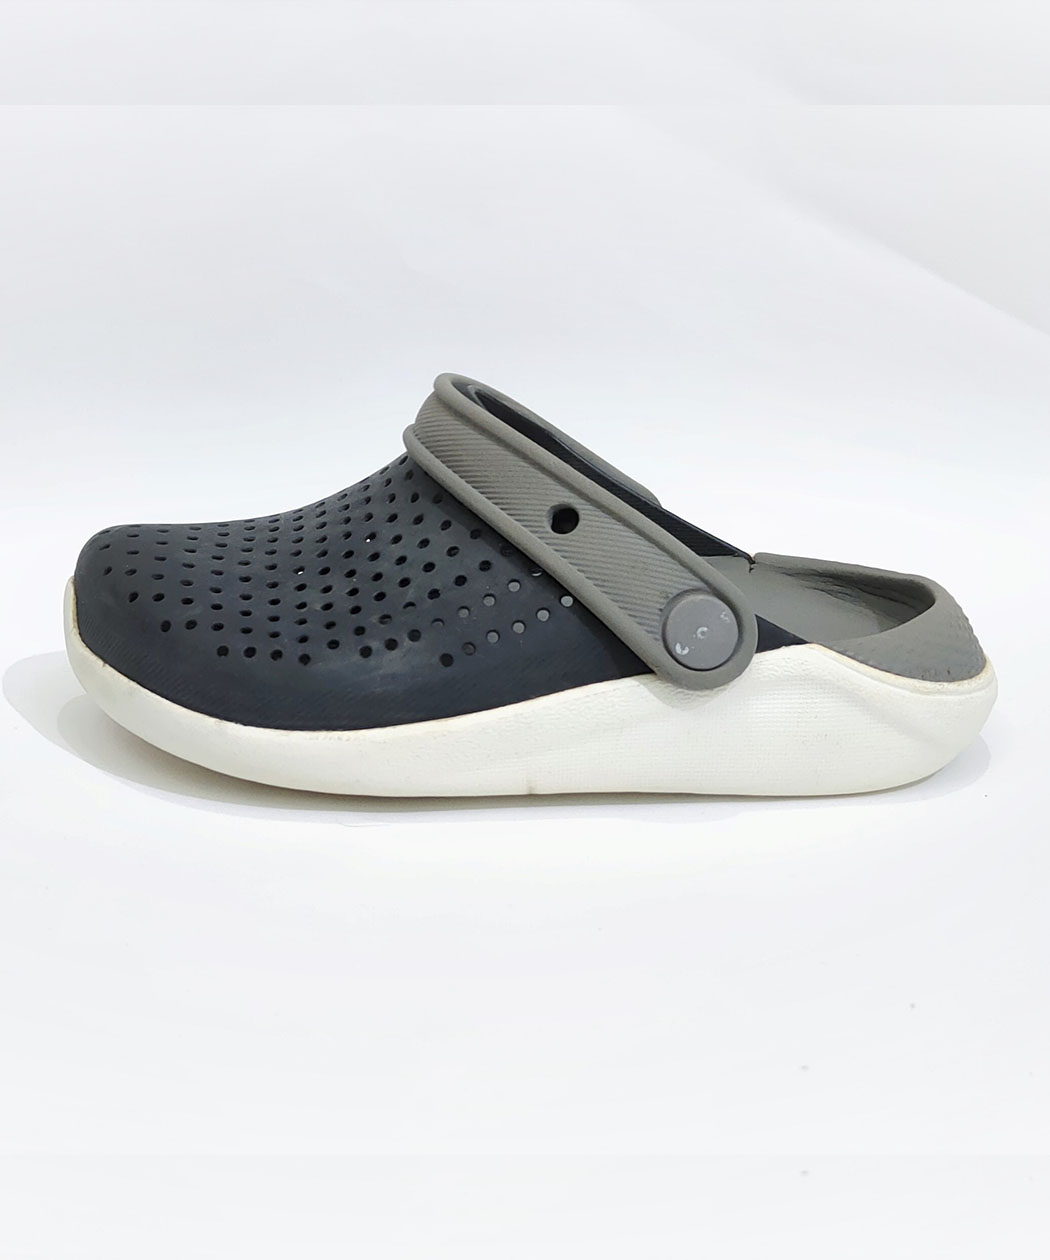 Crocs LiteRide clogs shoe 1